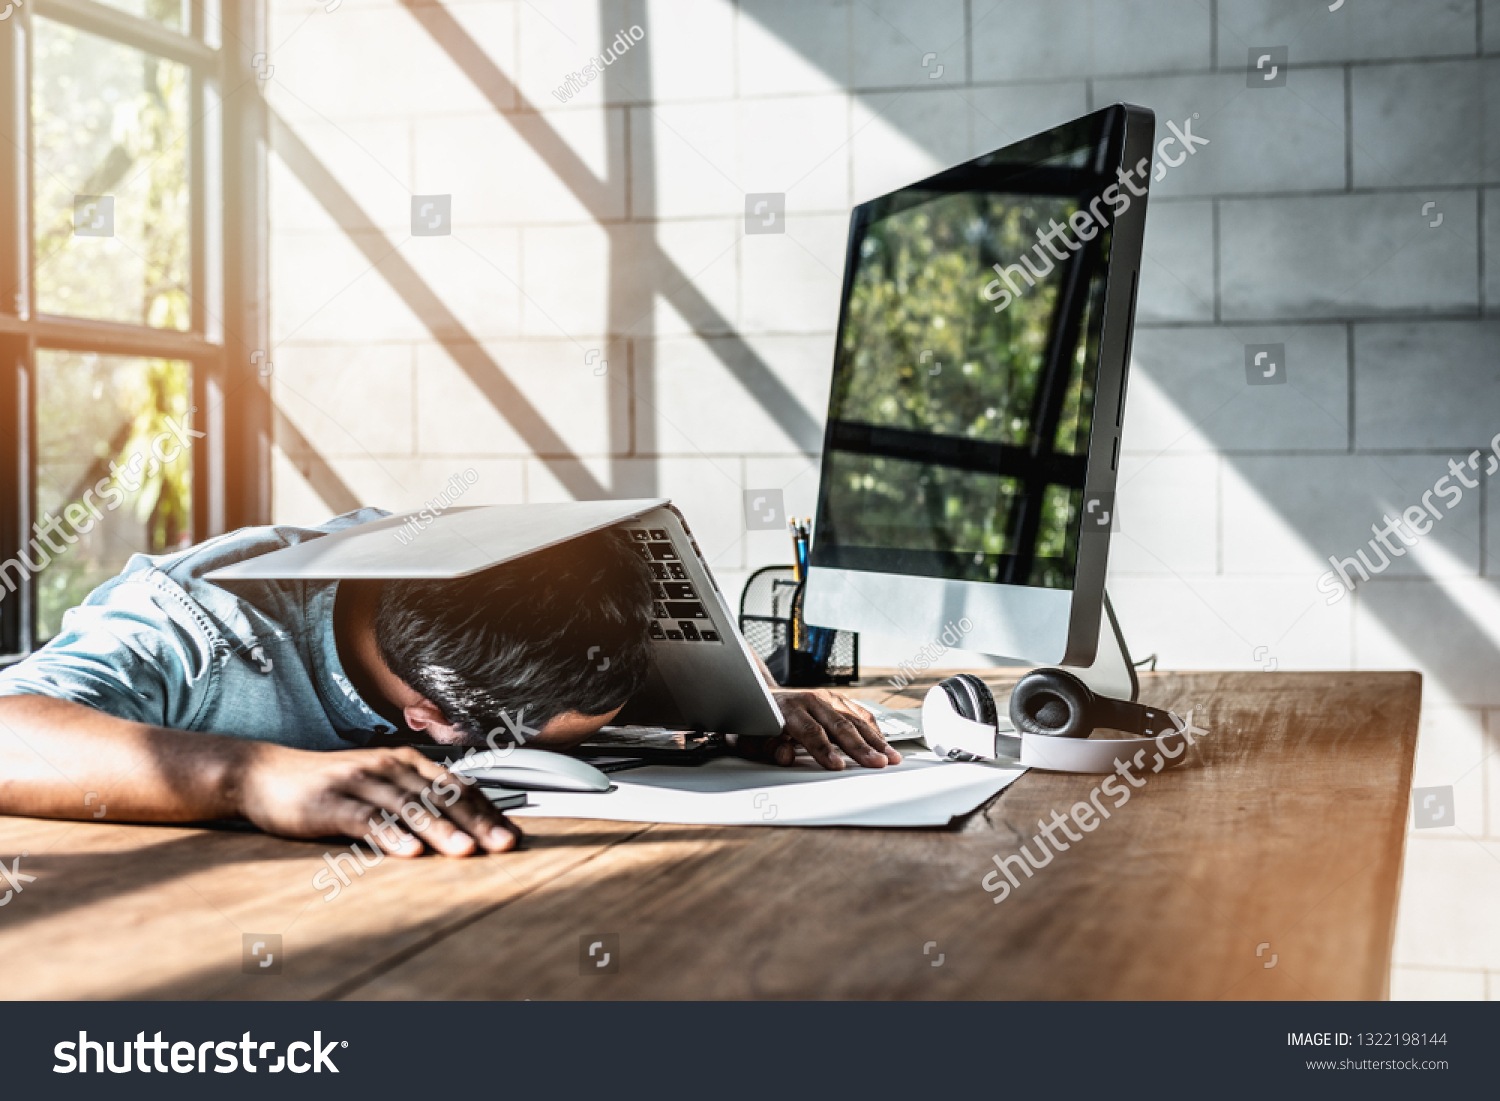 Men Fall Asleep Front Desk Computer Stock Photo Edit Now 1322198144